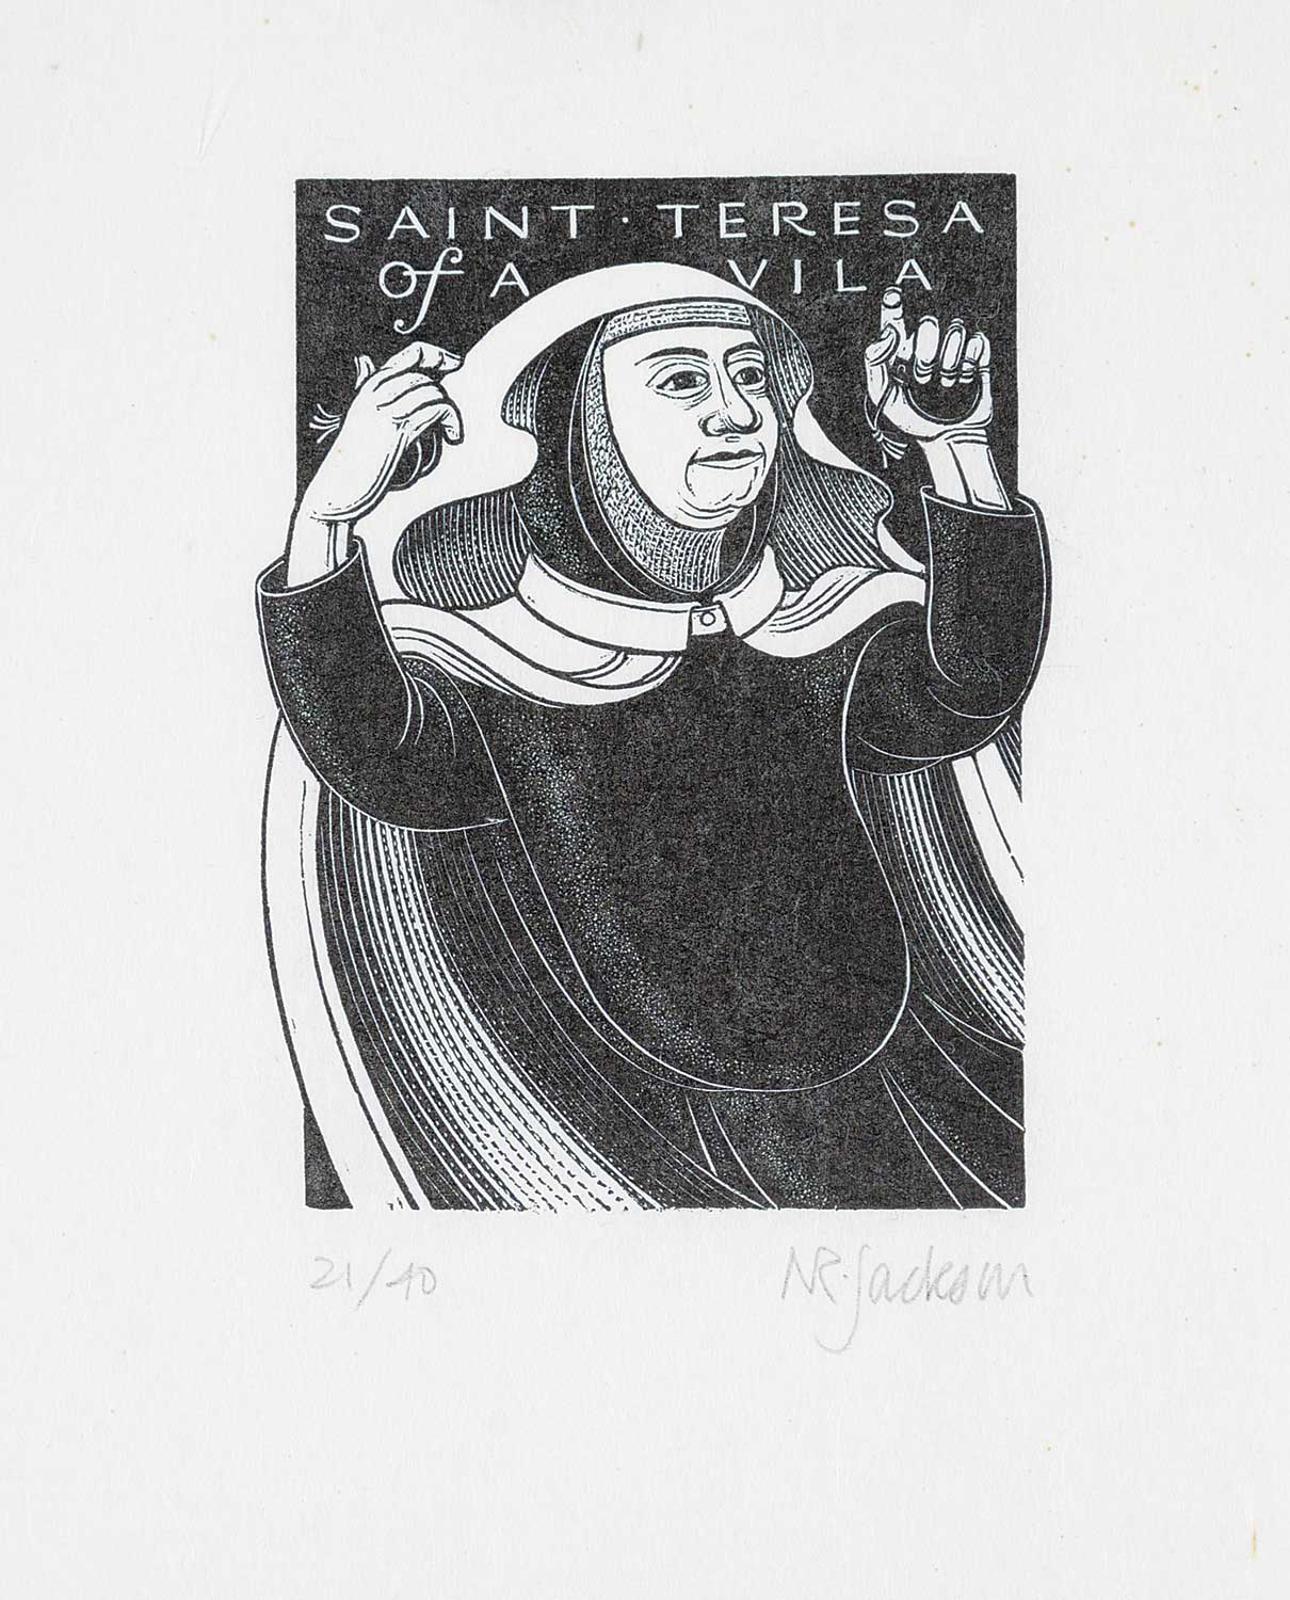 Nancy Ruth Jackson - Saint Teresa of Avila  #21/40